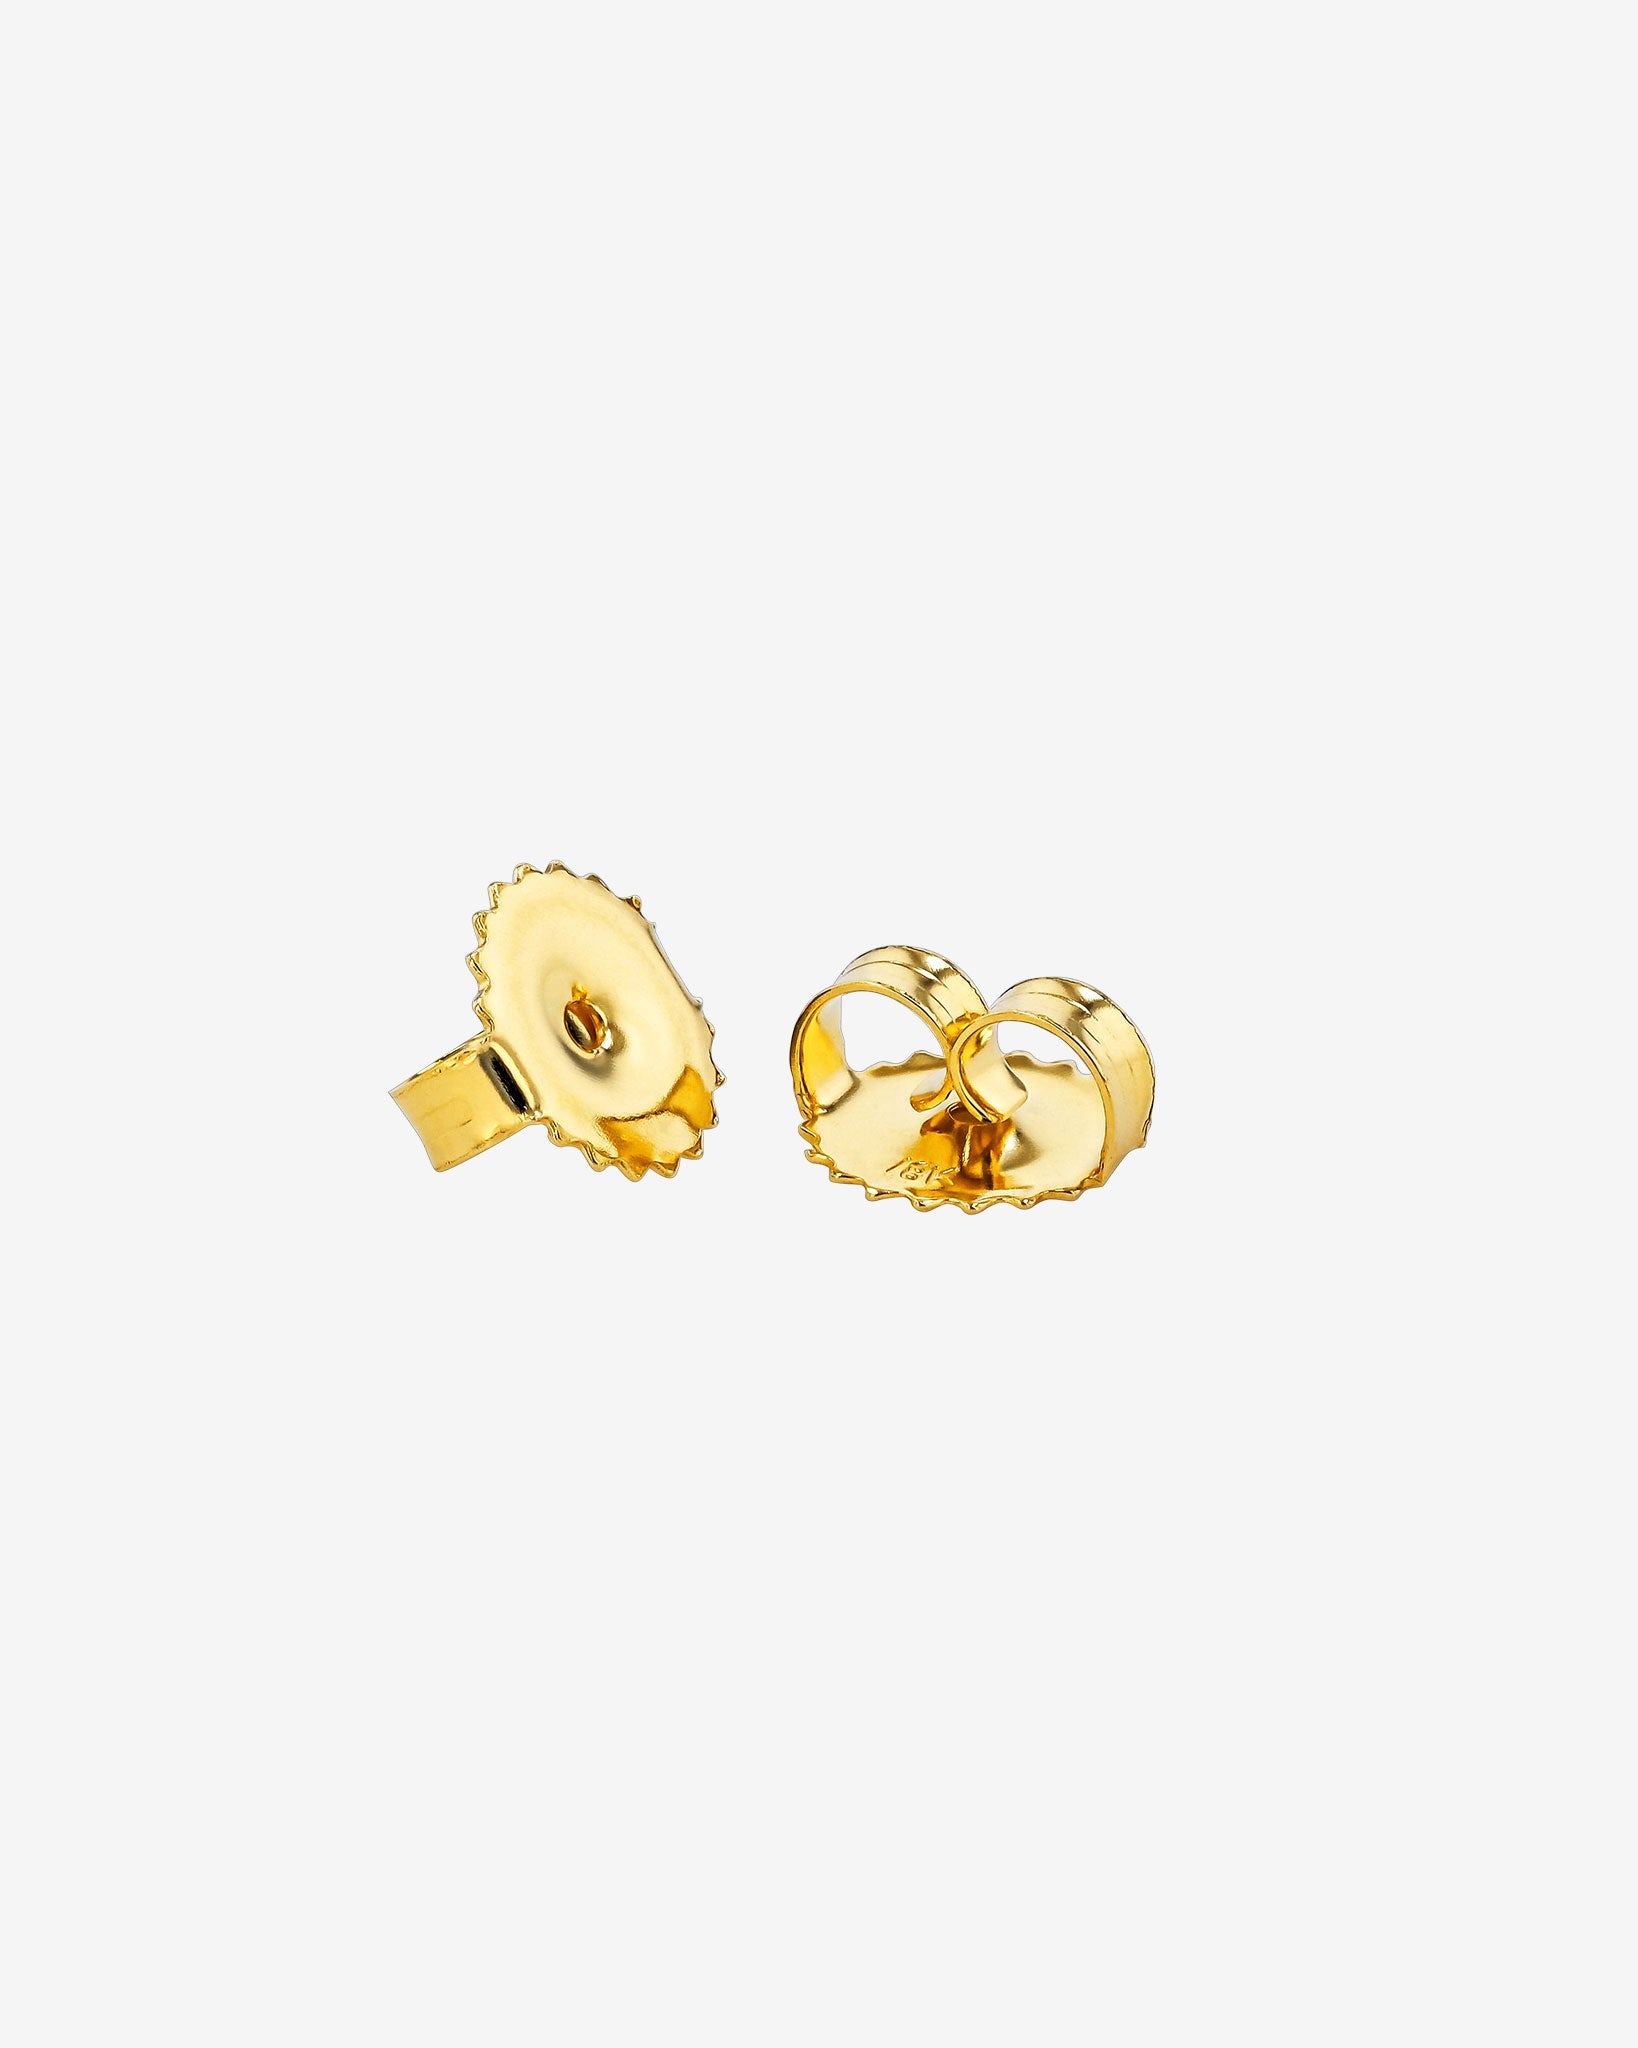 Suzanne Kalan 18K Yellow Gold Post Earring Backs